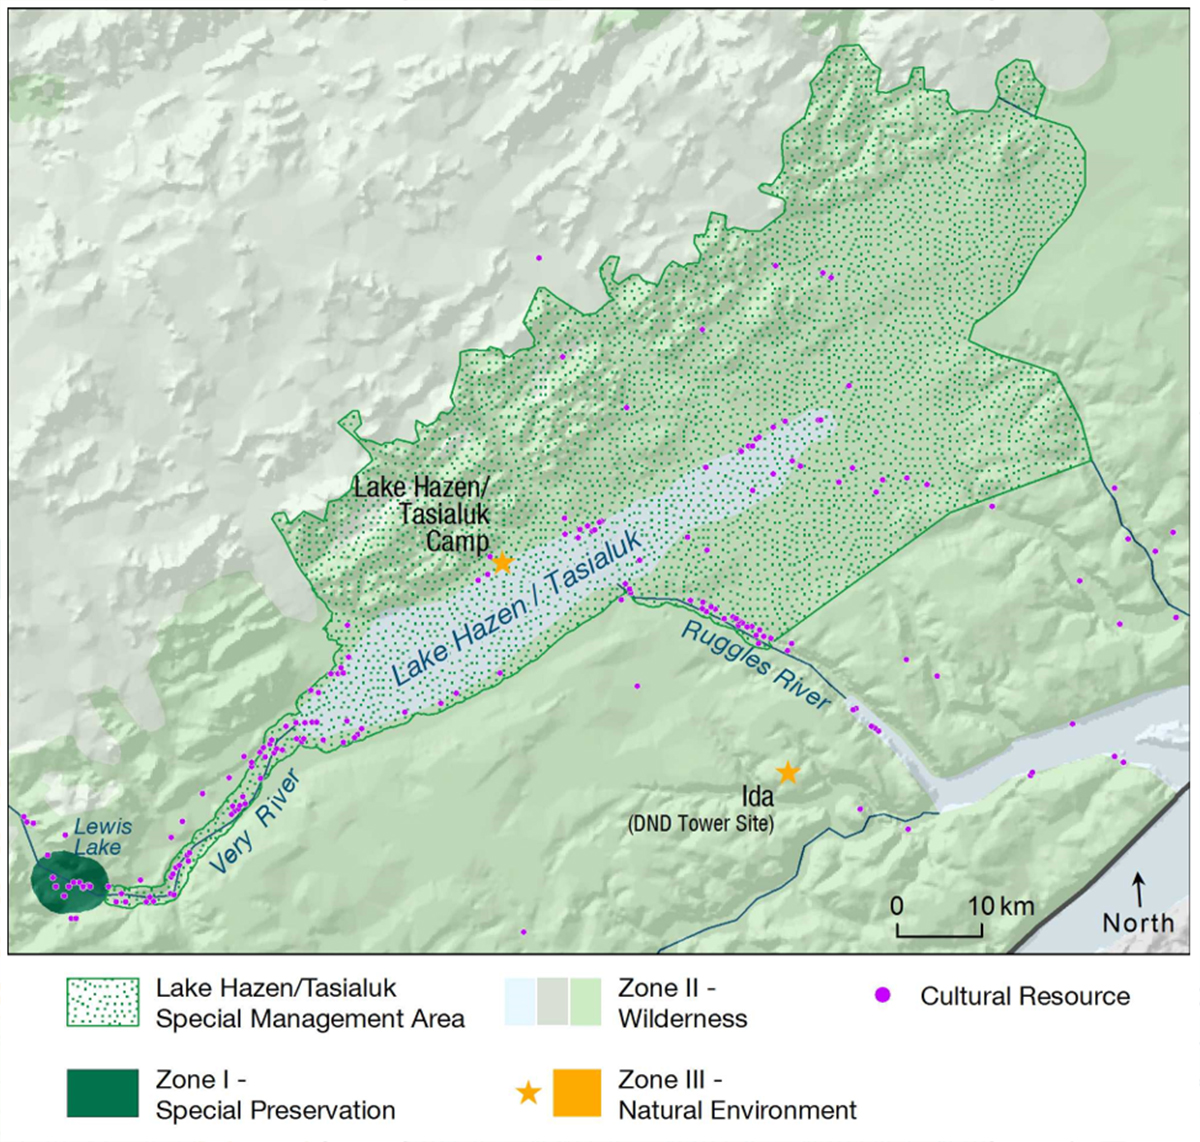 Map 5: Tasialuk/Lake Hazen Management Area, text description follows